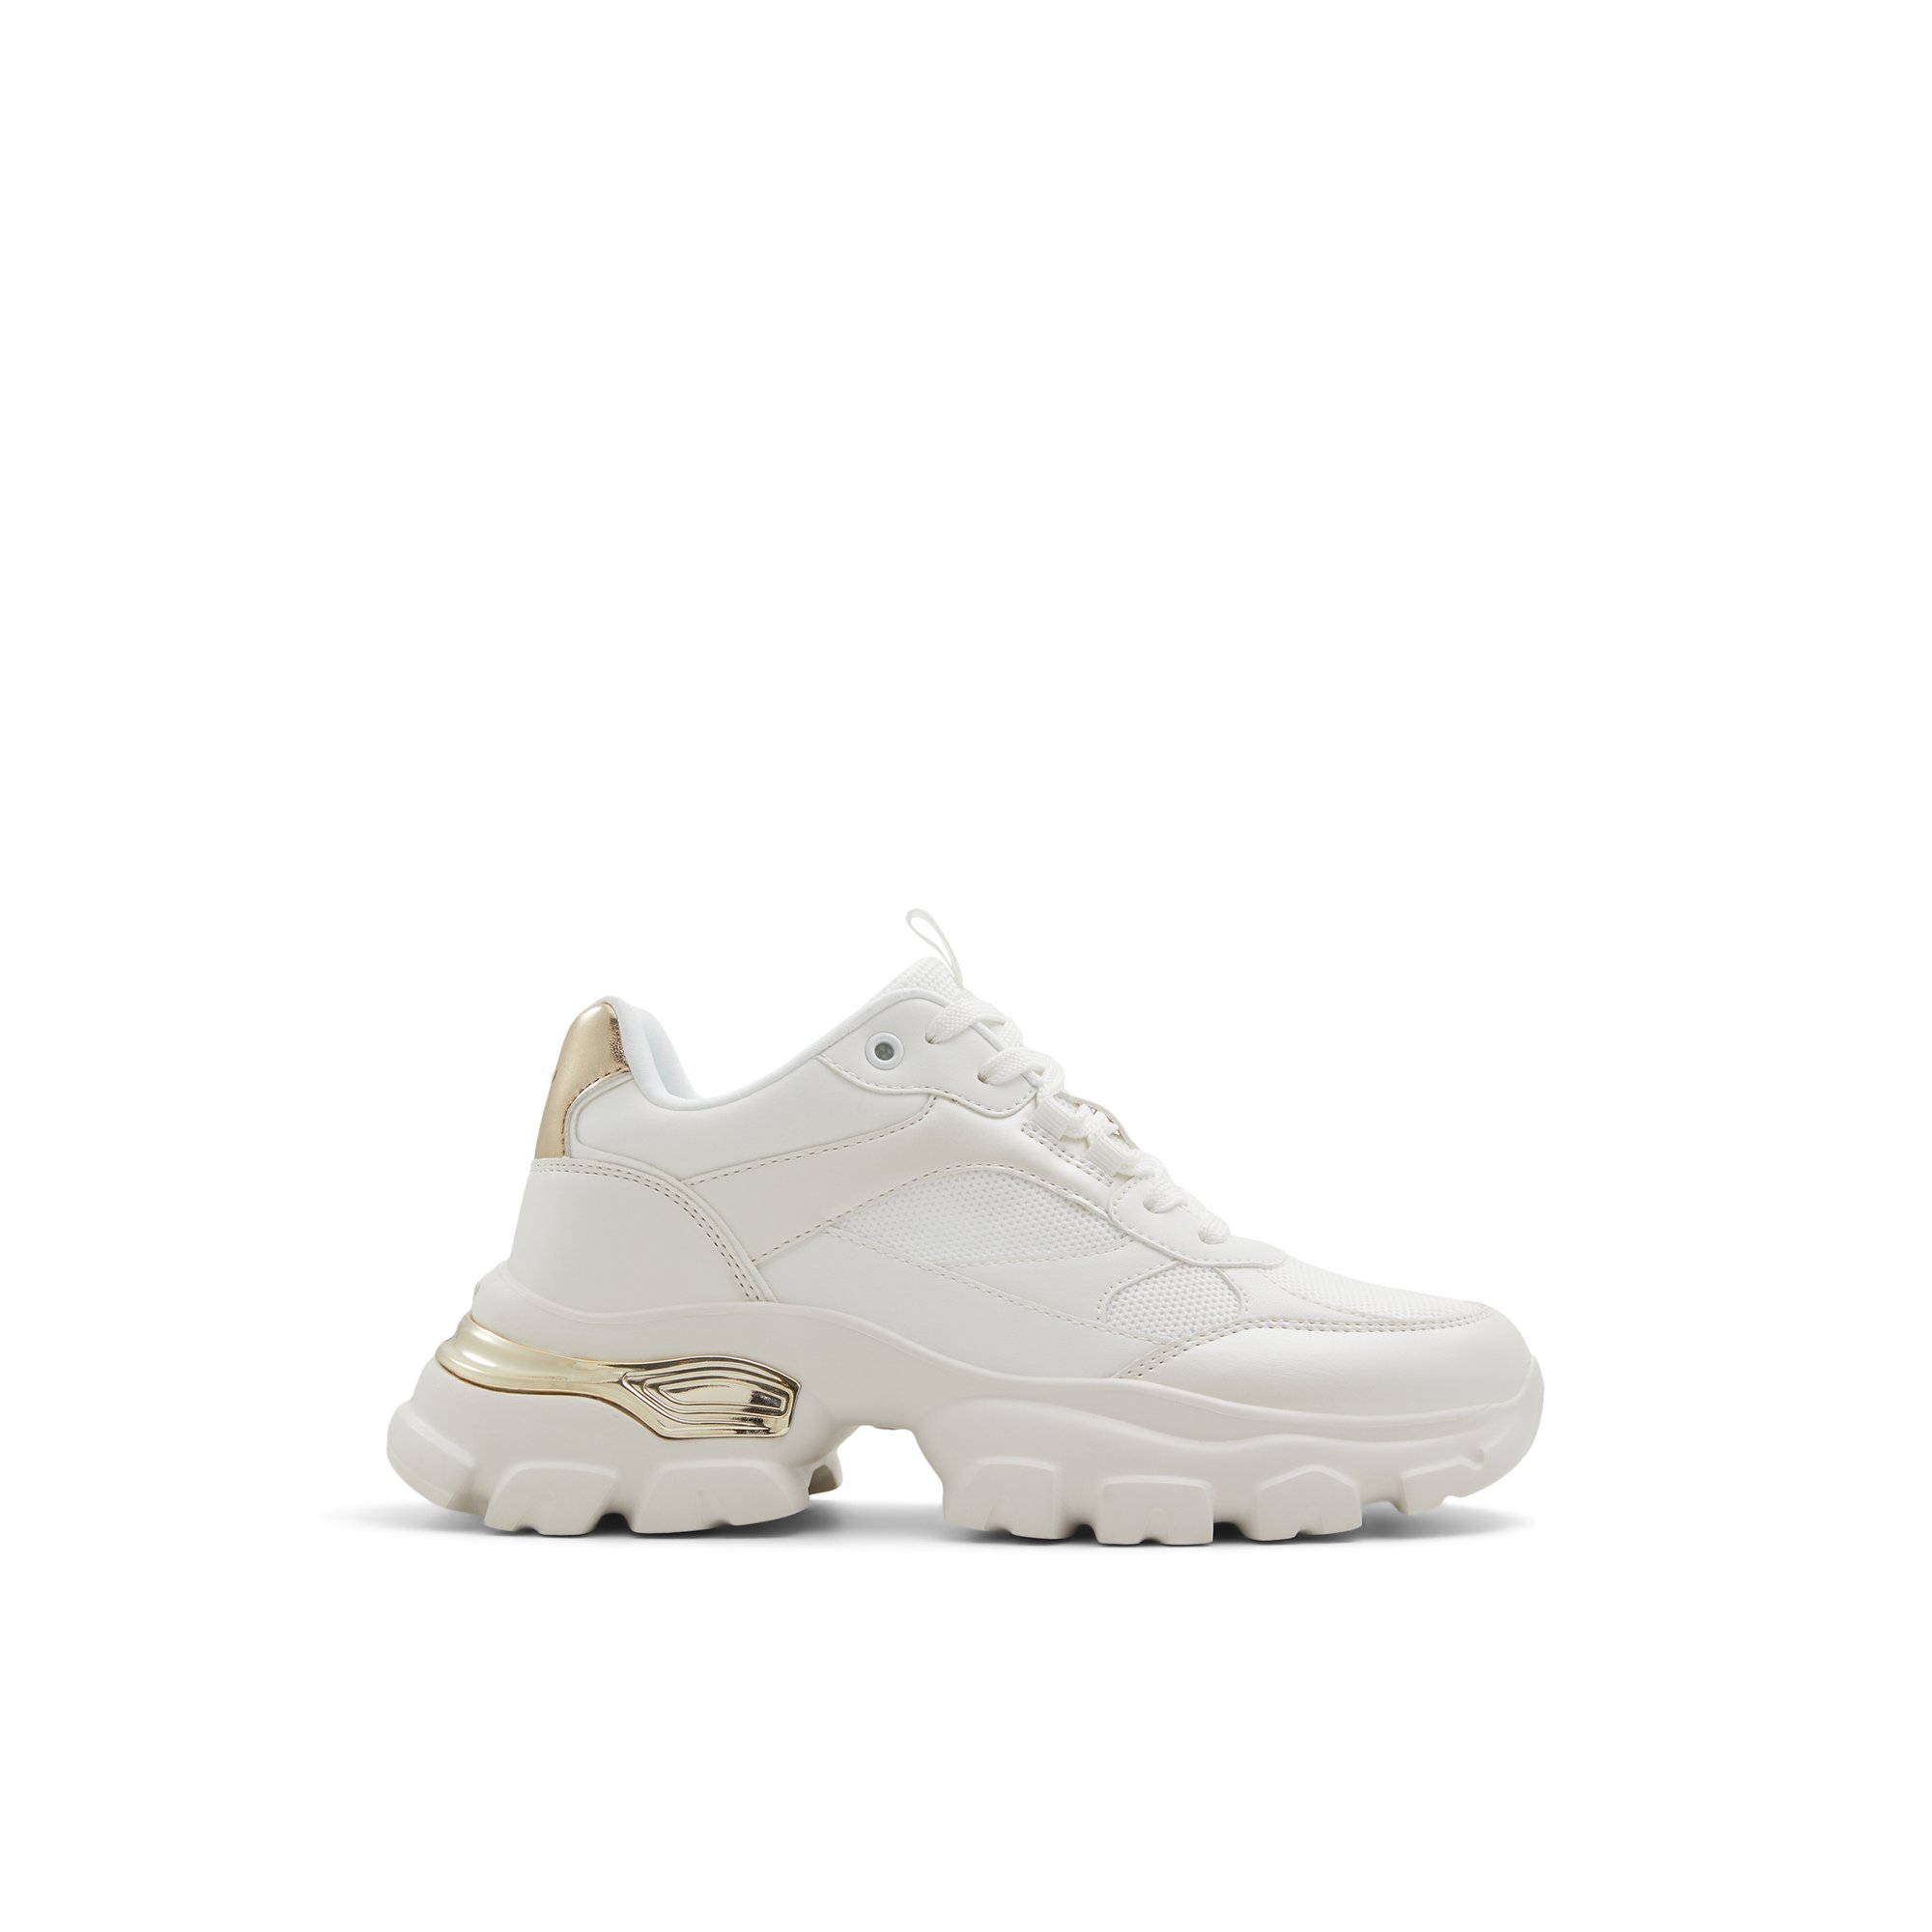 ALDO Hypestep - Women's Platform and Wedge Sneaker Sneakers - White